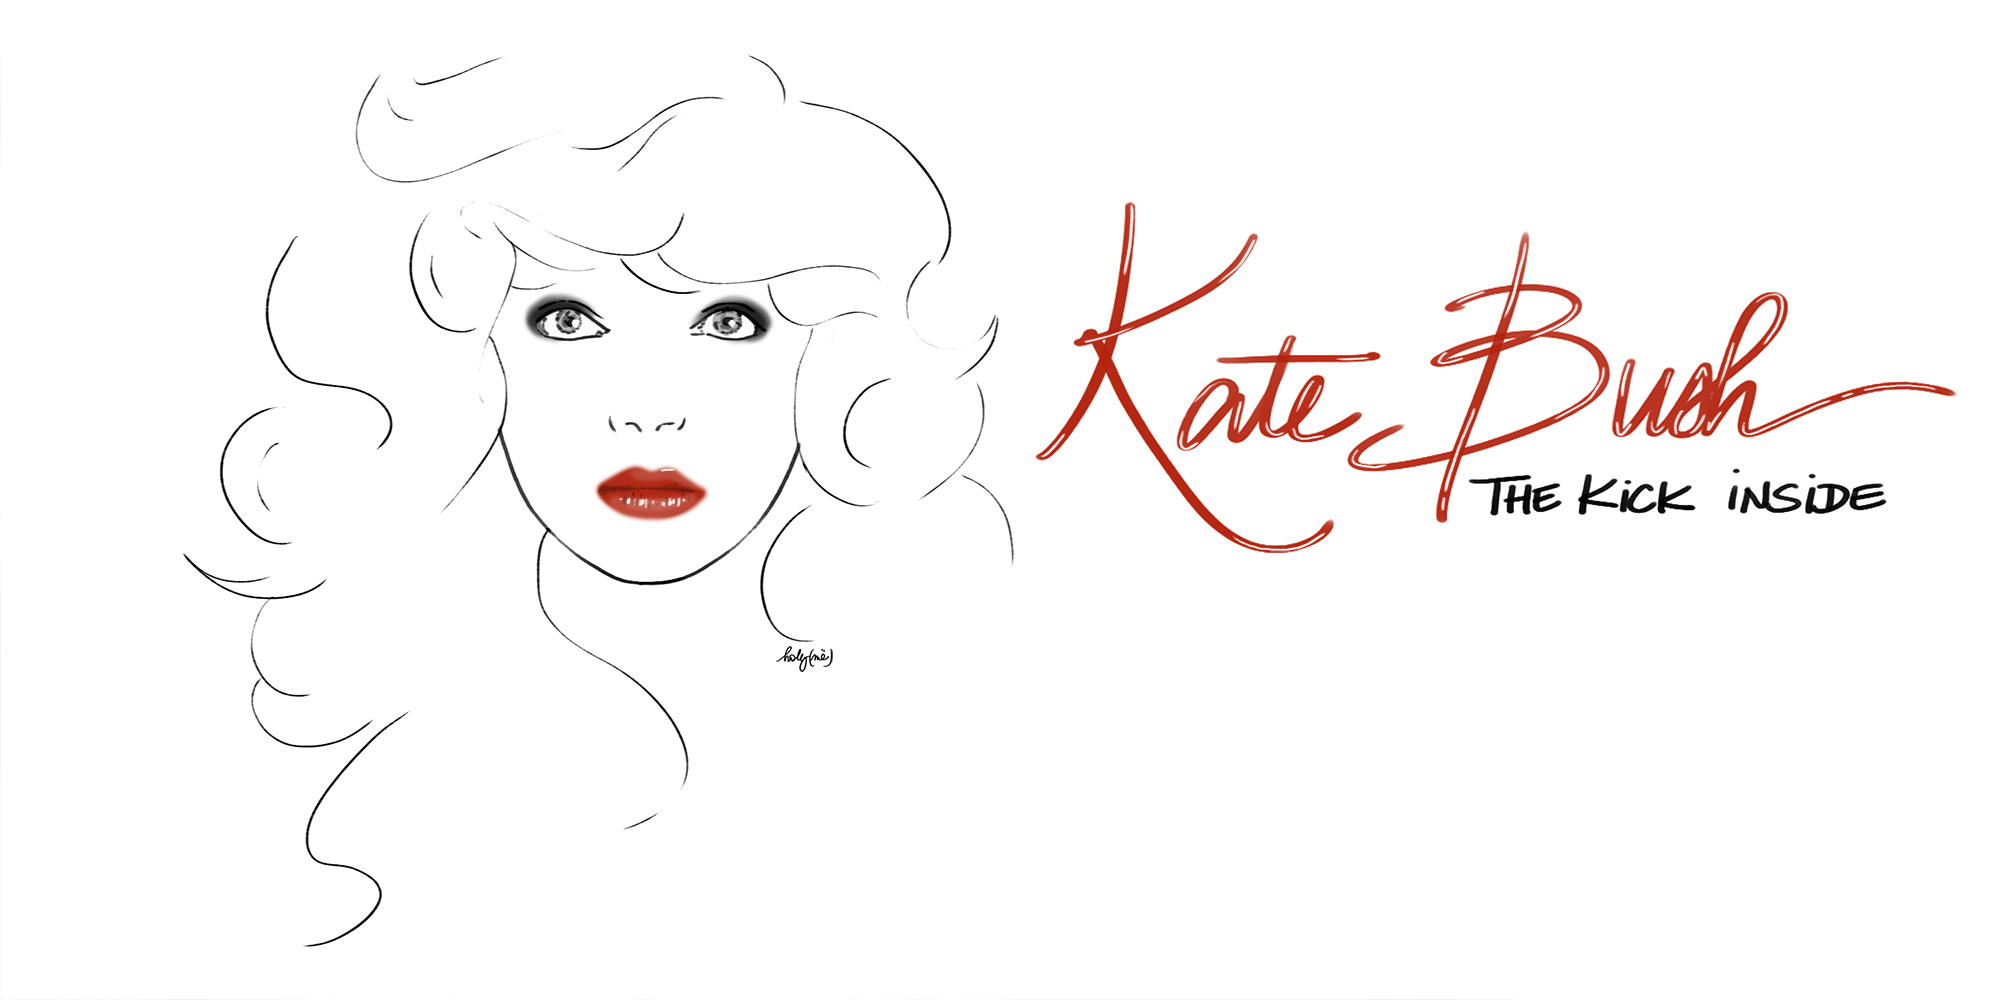 Kate Bush / The Kick Inside / Holy(me)